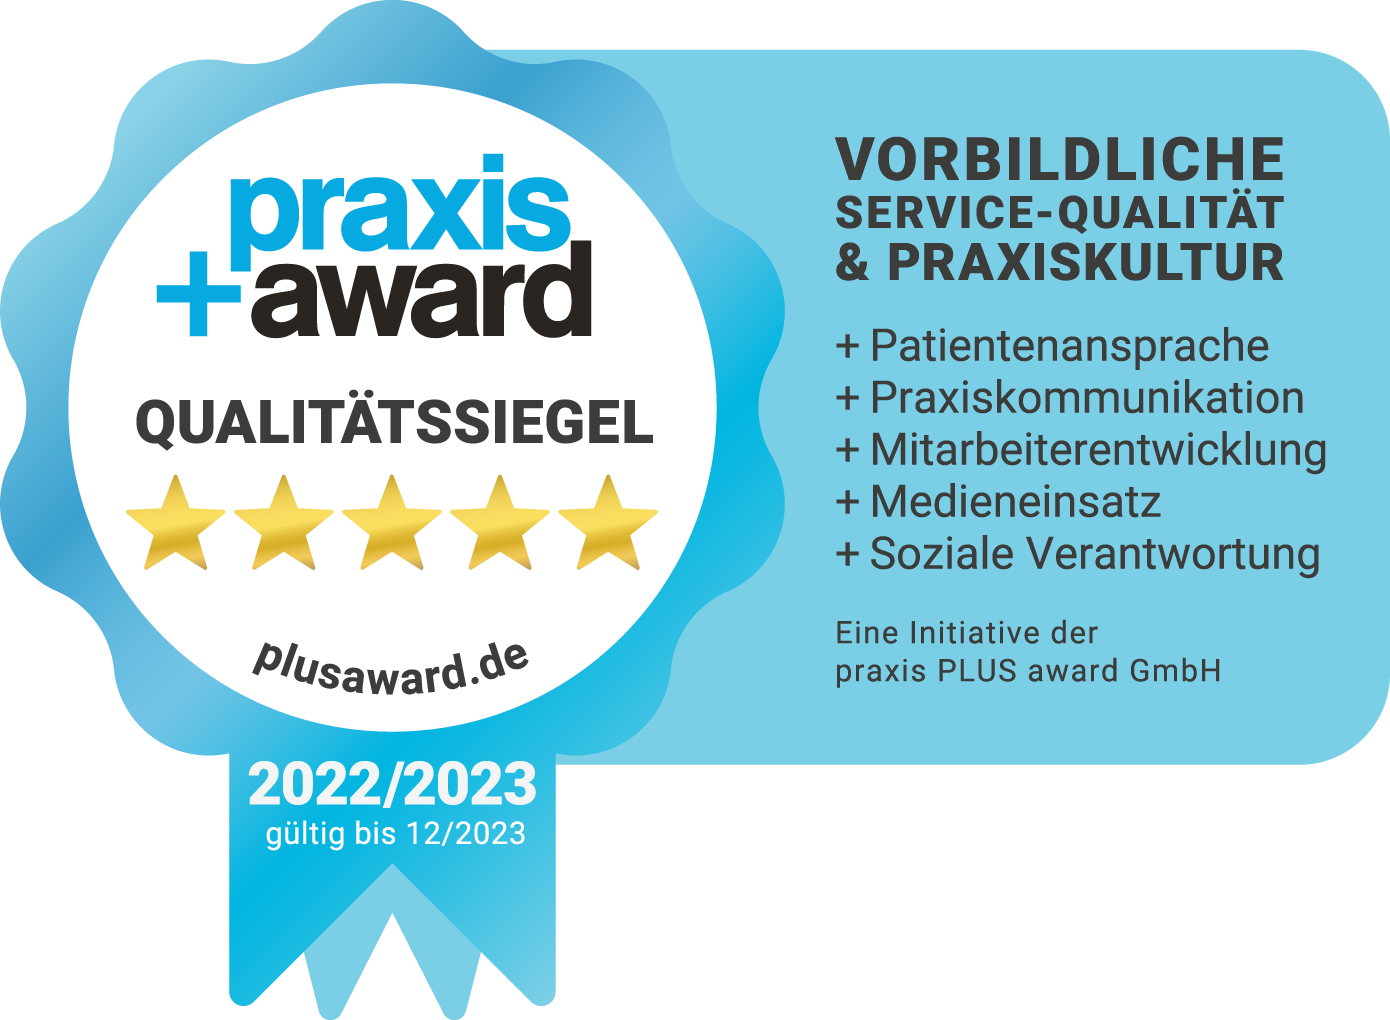 praxis award image